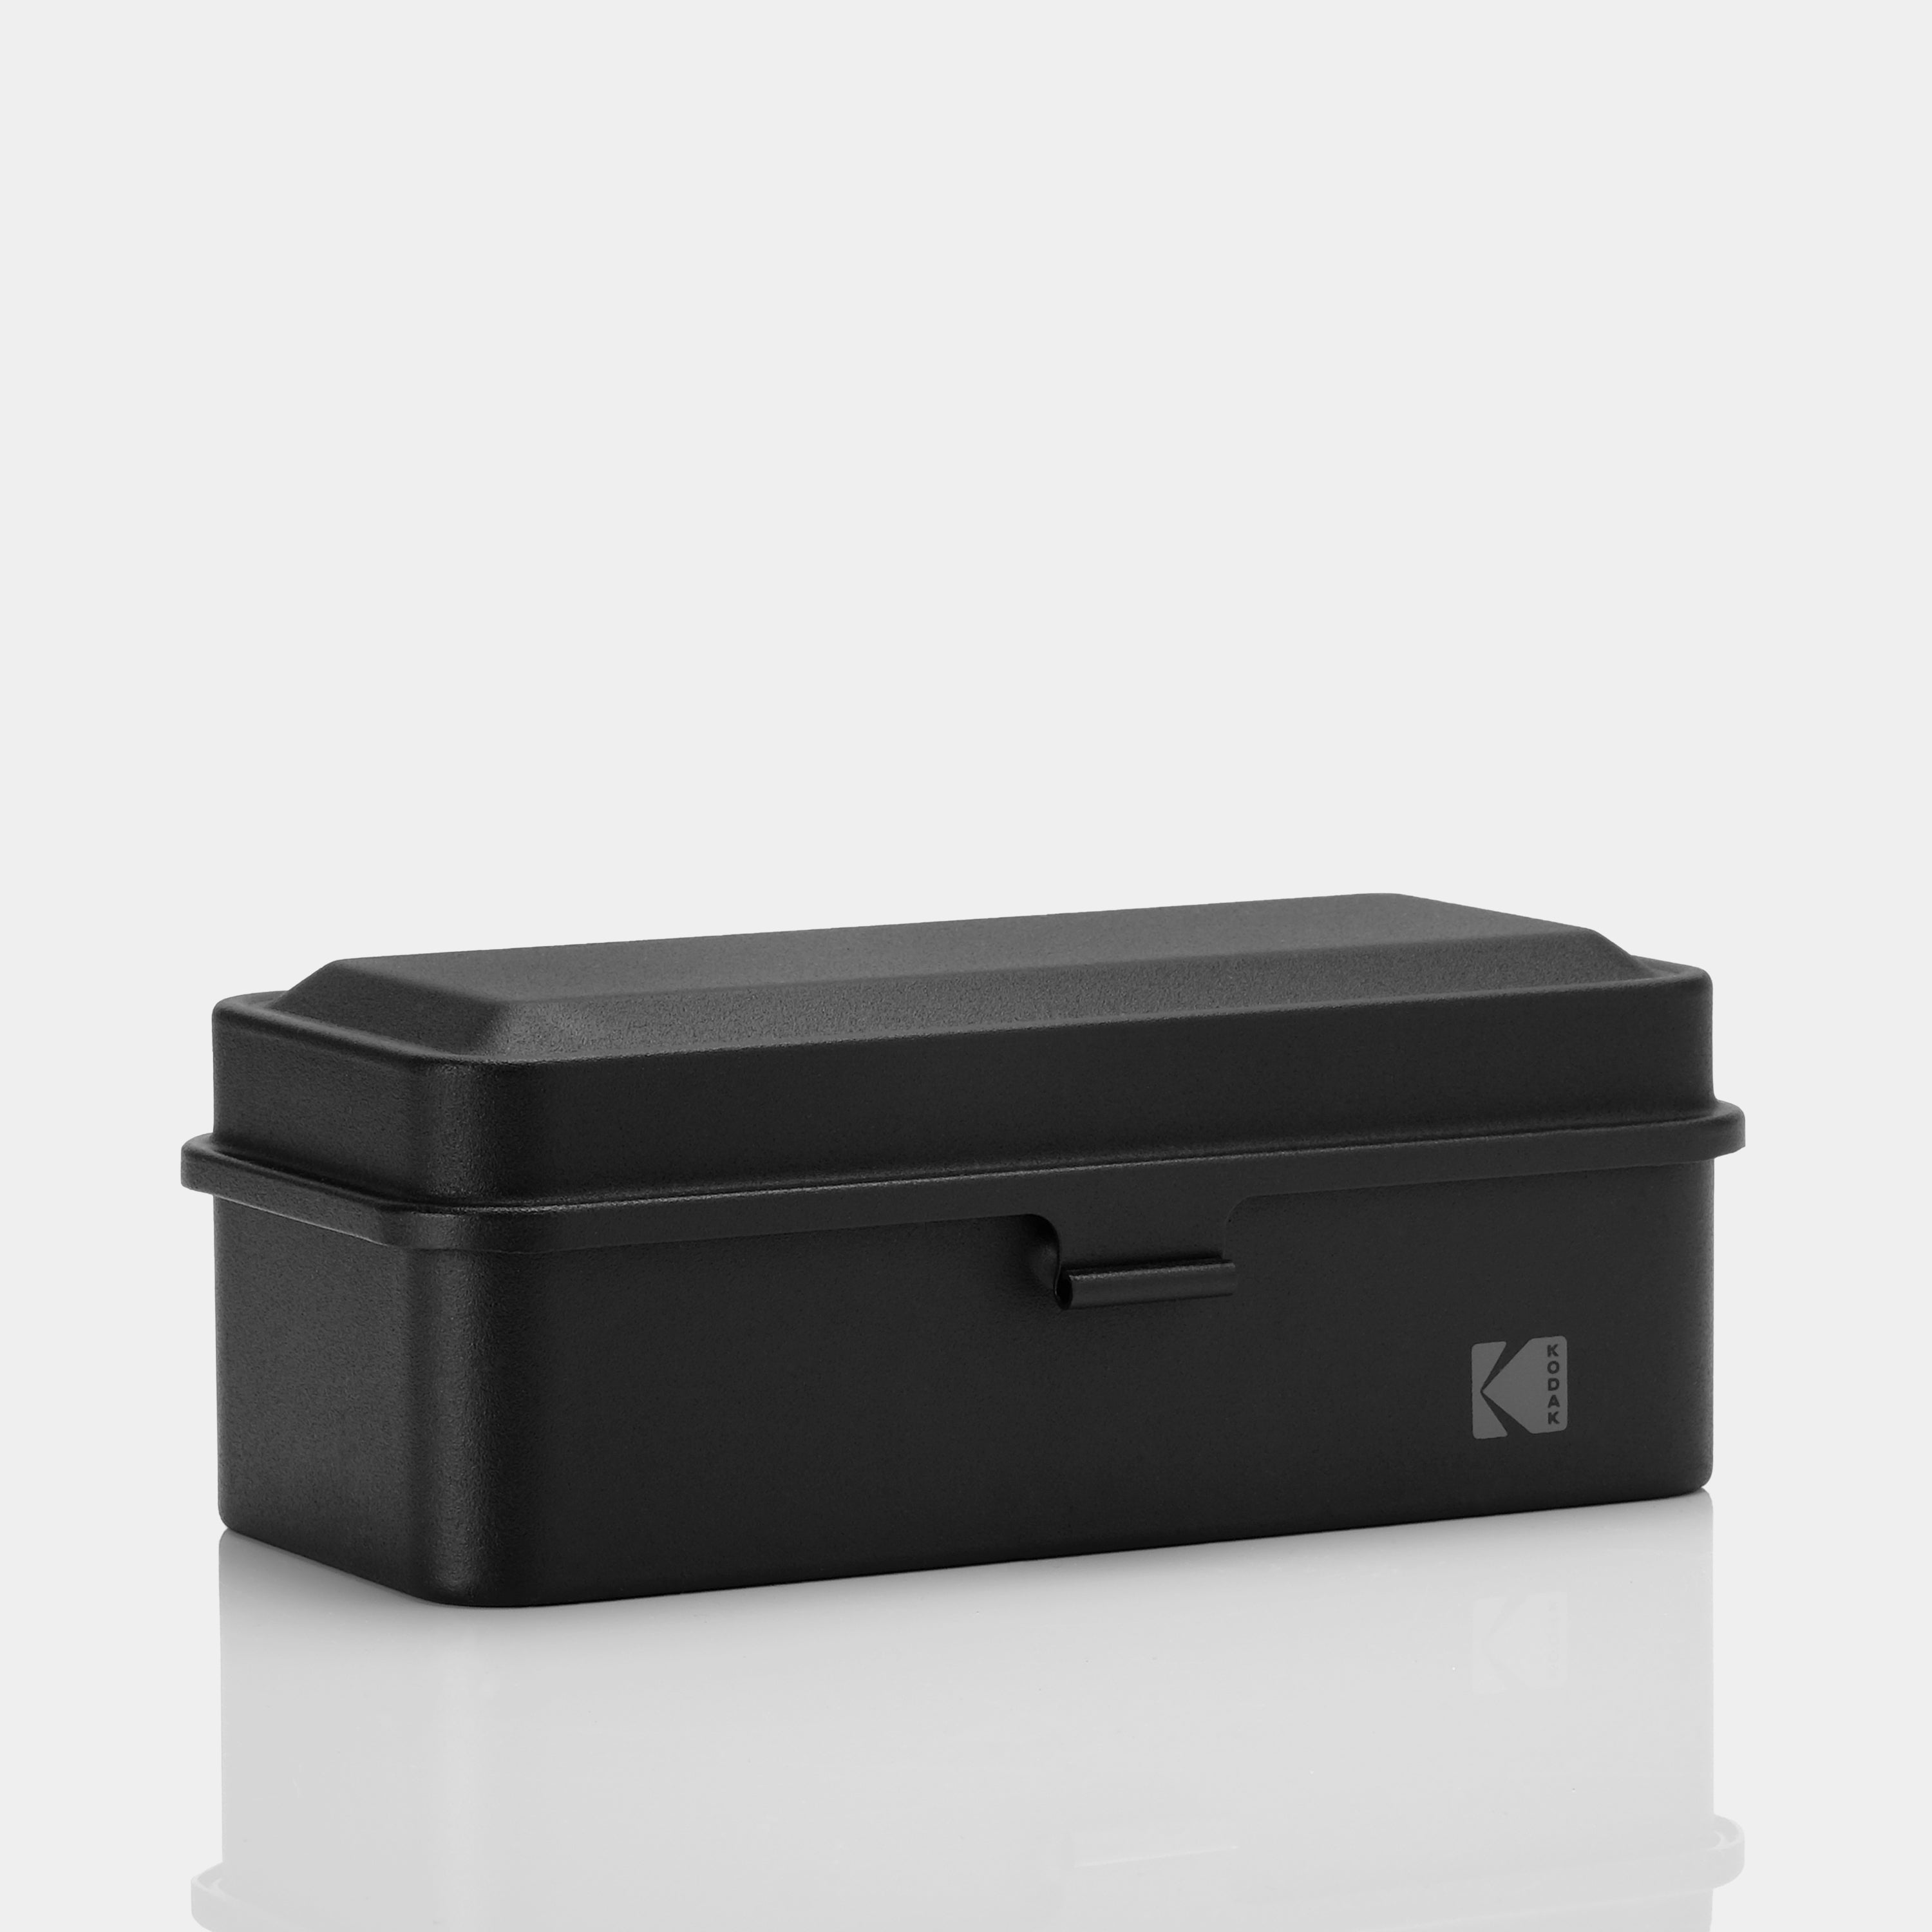 Kodak Black Classic 120/35mm Film Storage Case